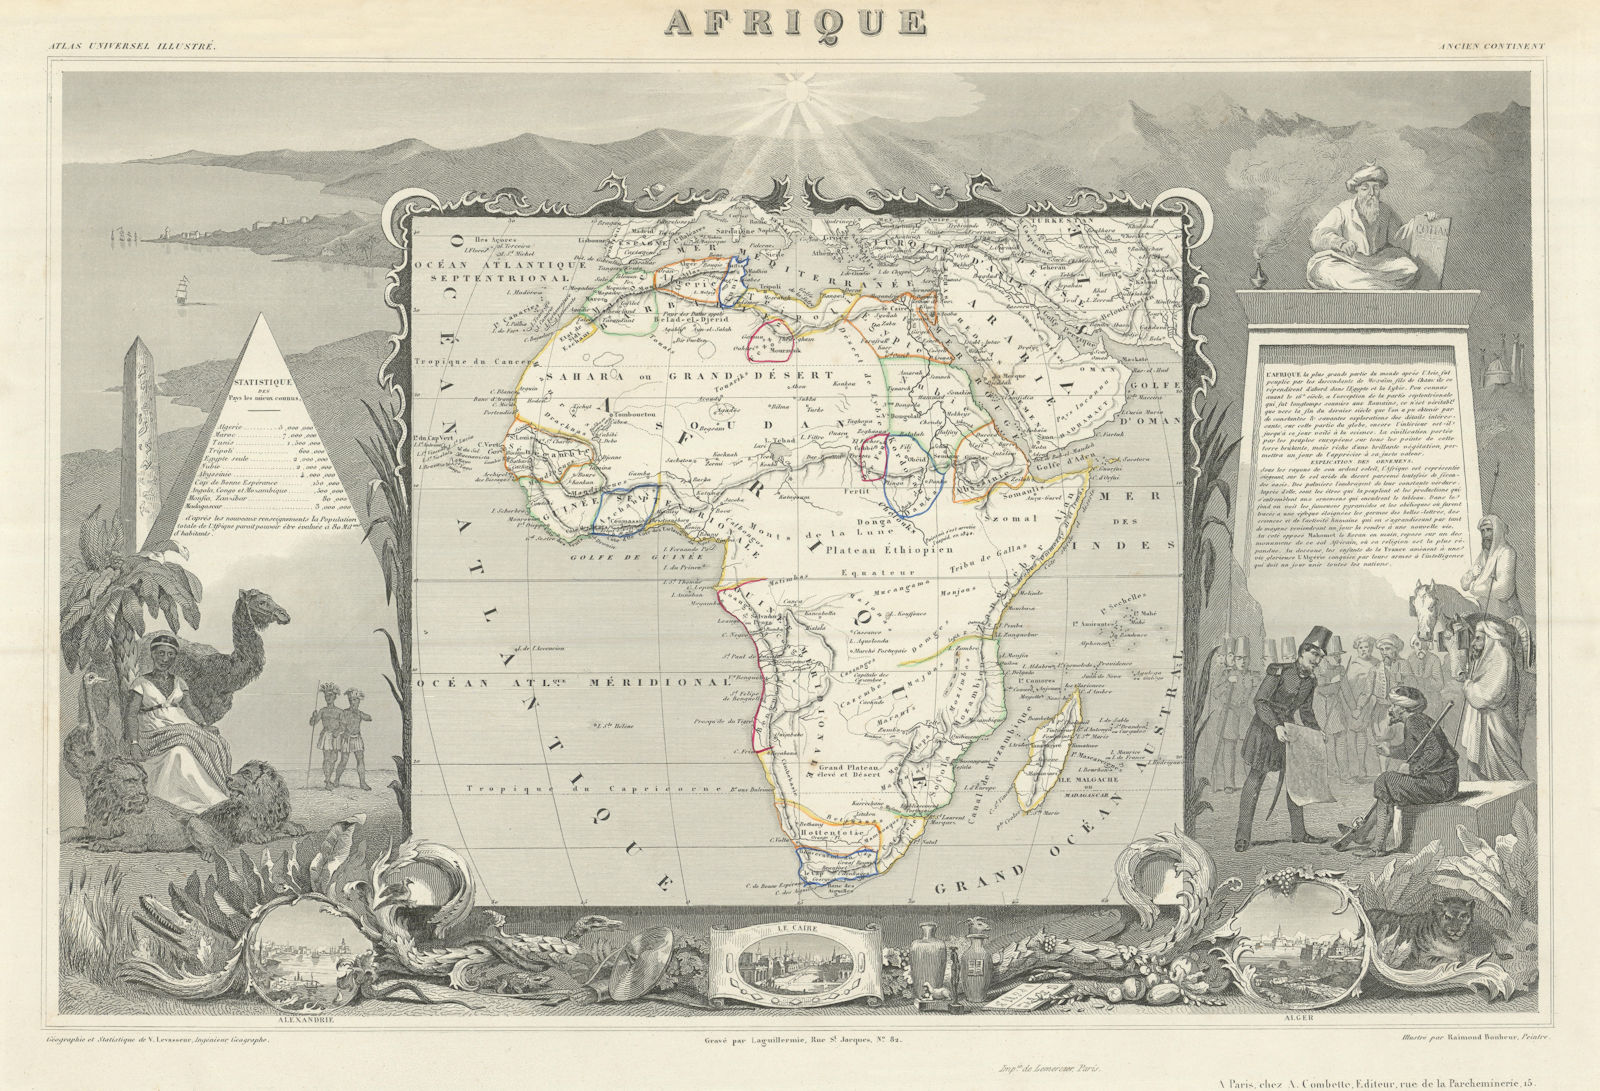 Associate Product AFRIQUE. Africa. Decorative antique map/carte by Victor LEVASSEUR 1856 old